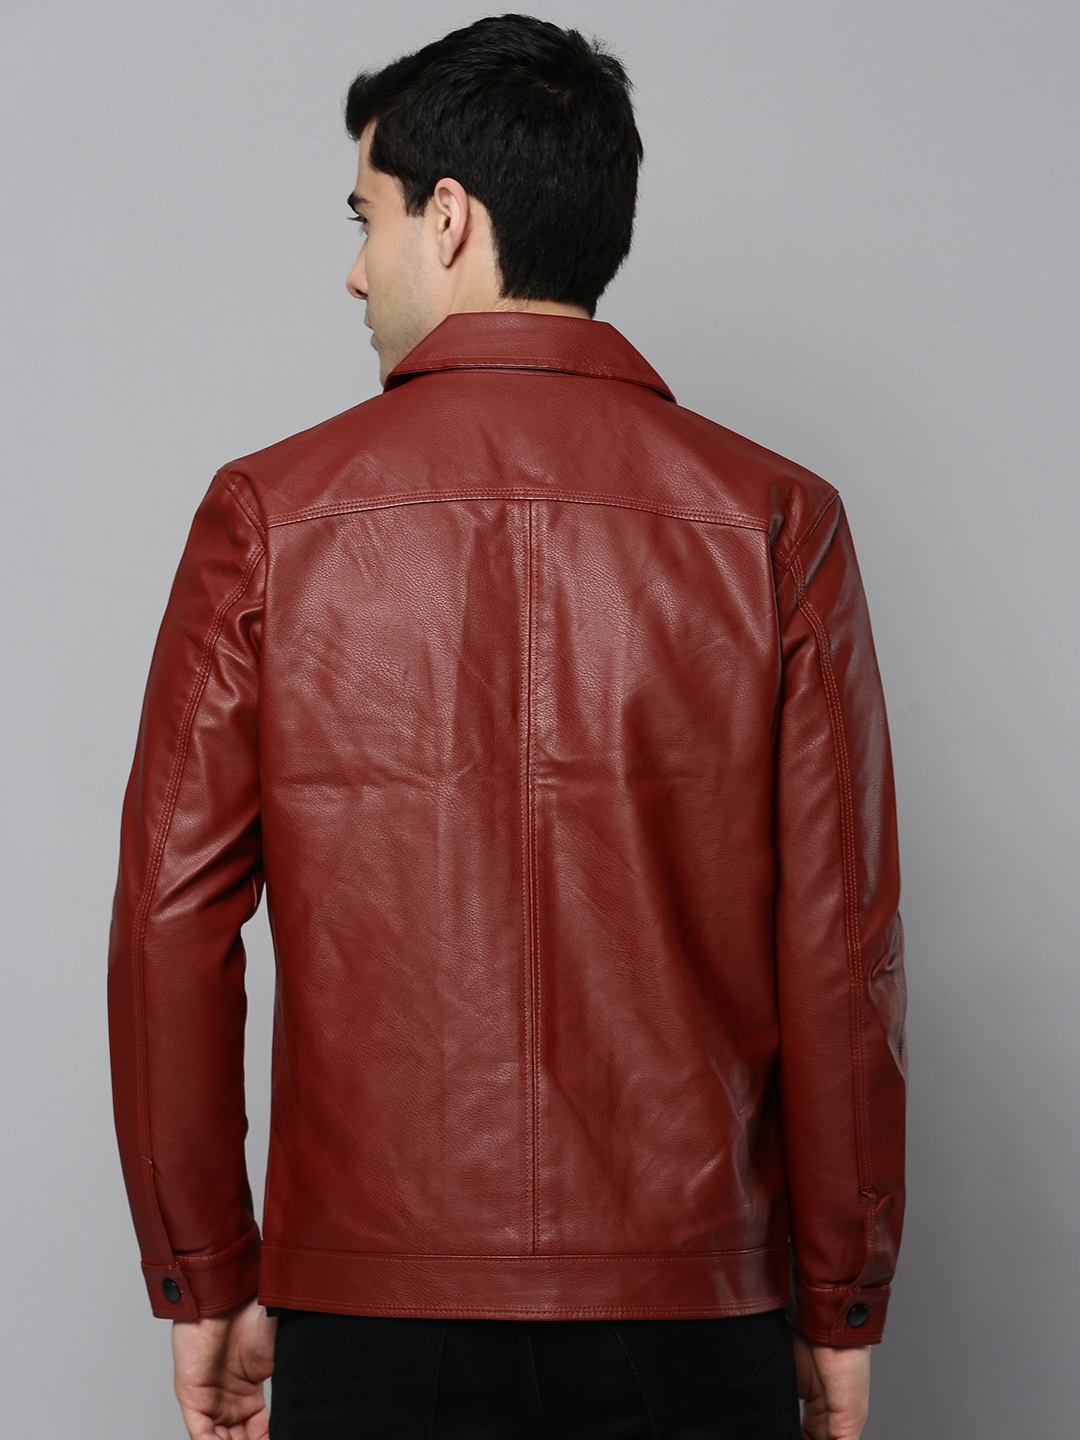 Men's Orange Leather Solid Leather Jackets